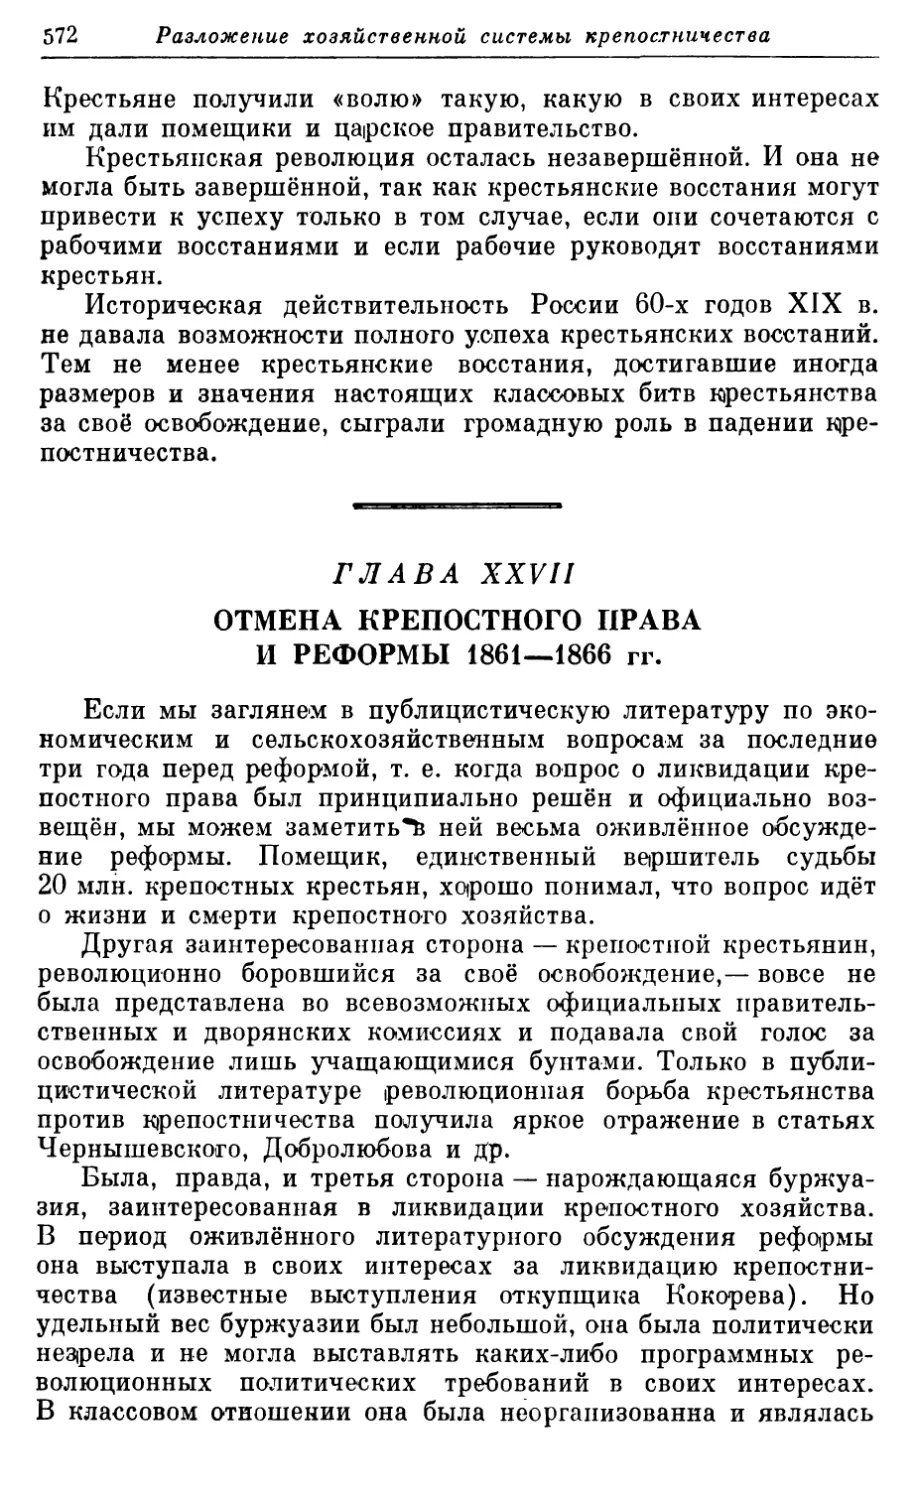 Глава XXVII. Отмена крепостного права и реформы 1861—1866 гг.